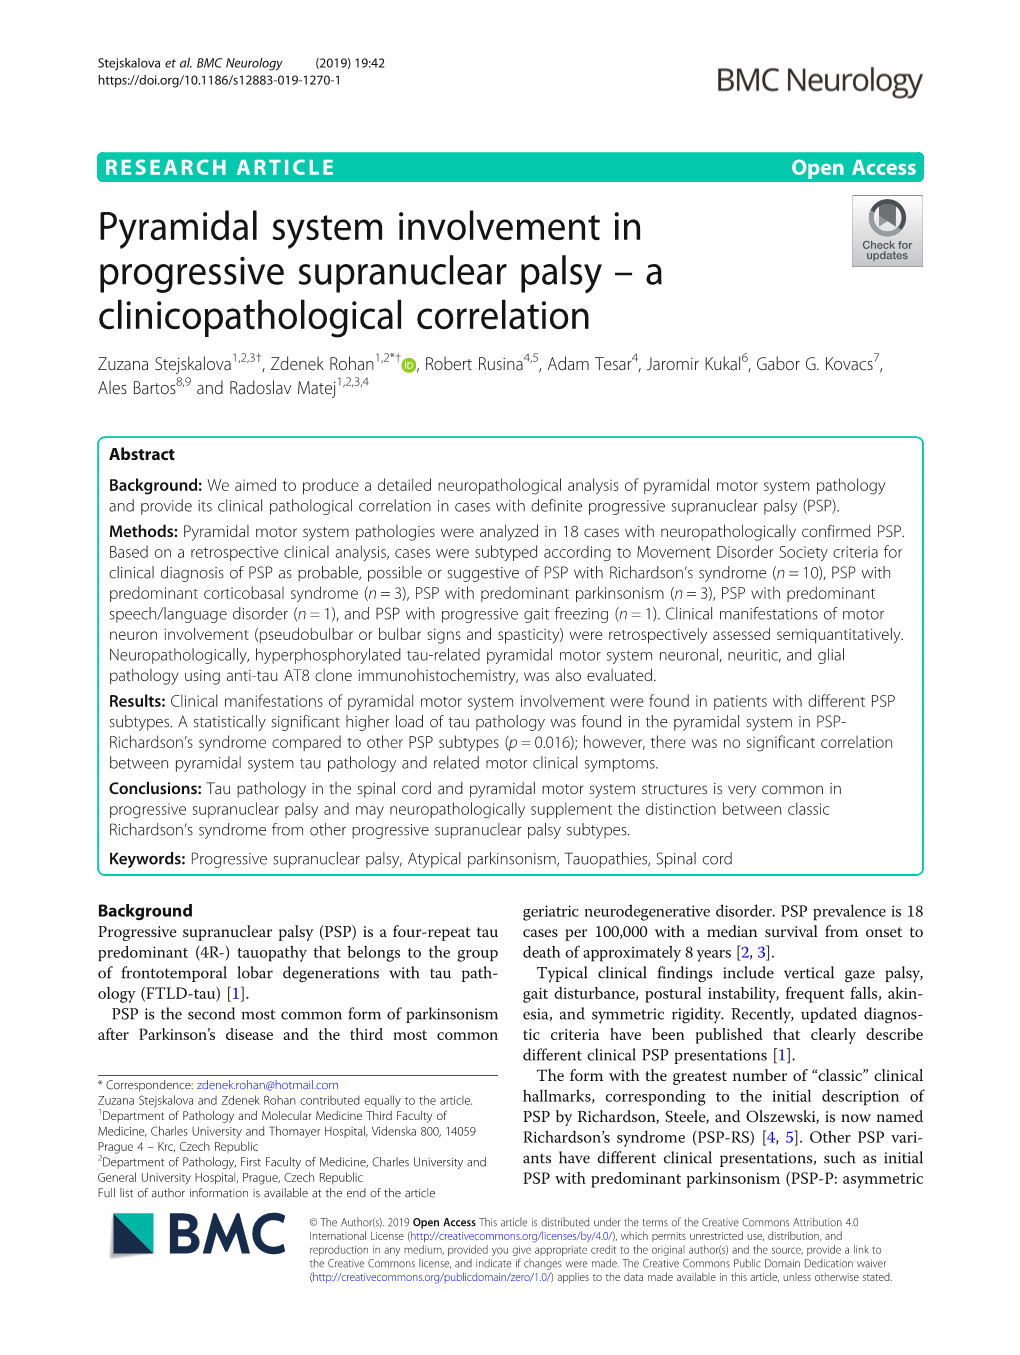 Pyramidal System Involvement in Progressive Supranuclear Palsy – A